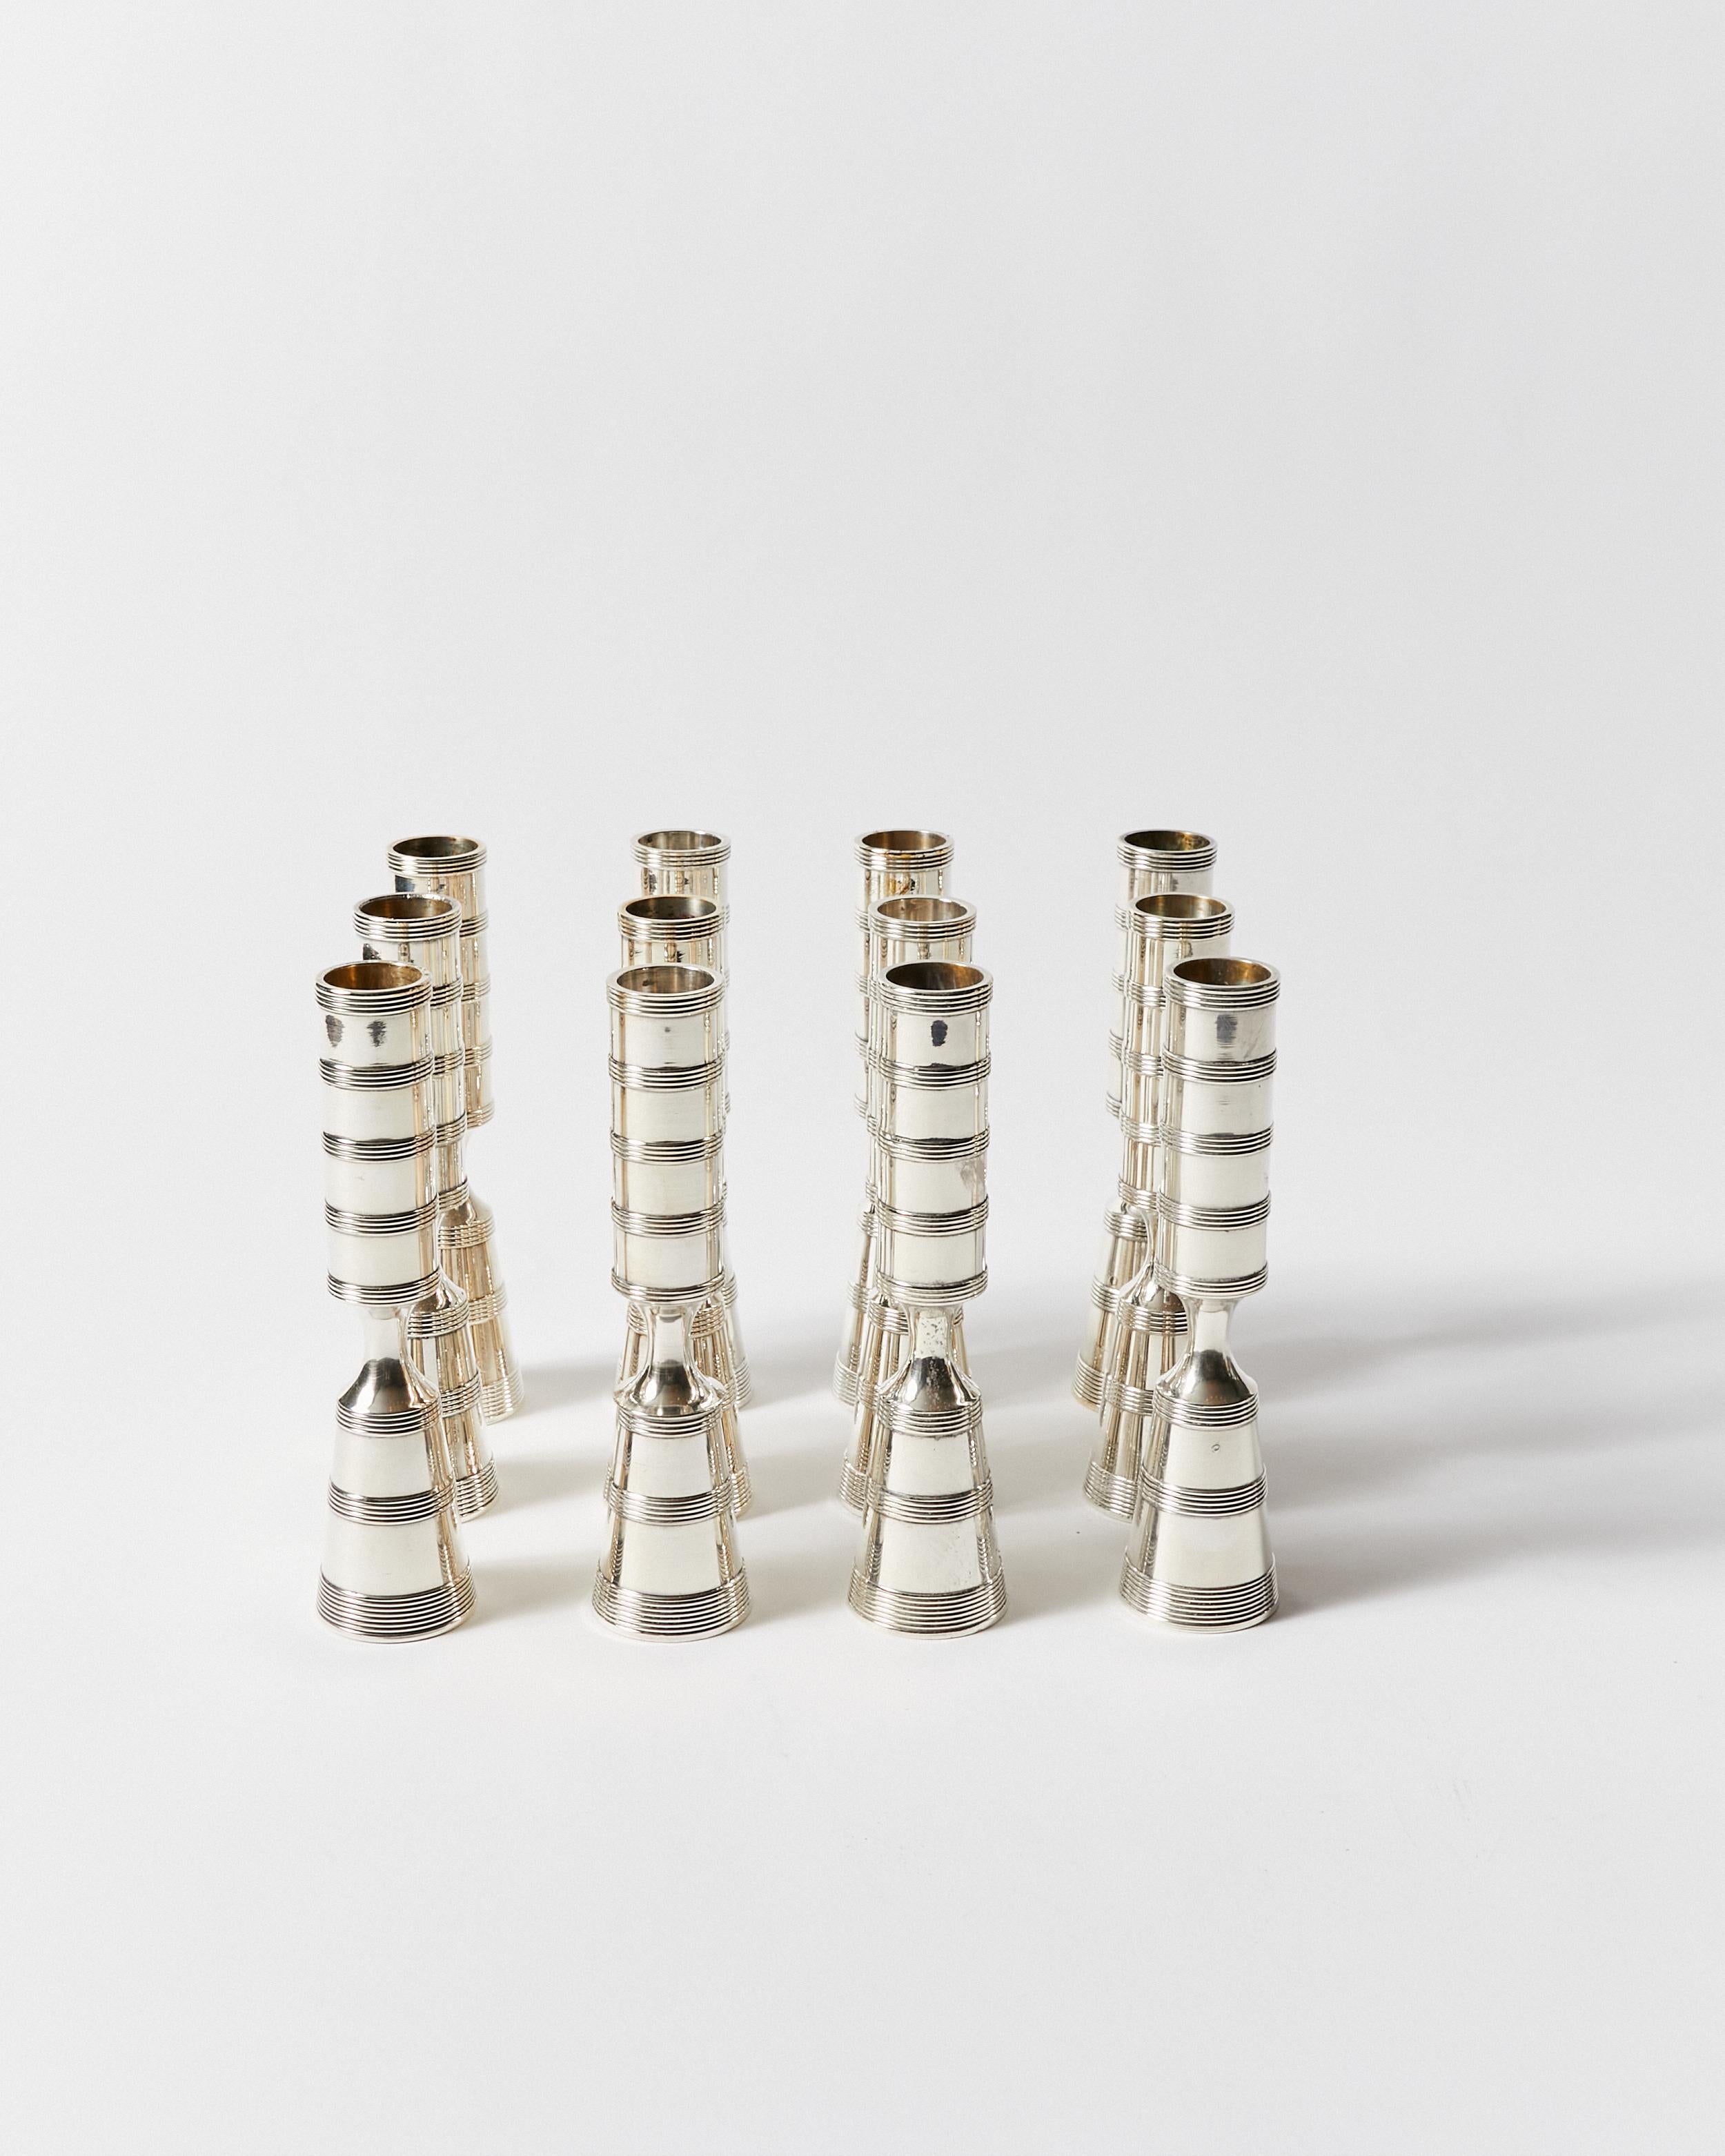 Set of thirty eight silver plated pilar candlesticks. Designed by Jens Harald Quistgaard for Dansk Designs Copenhagen.
    